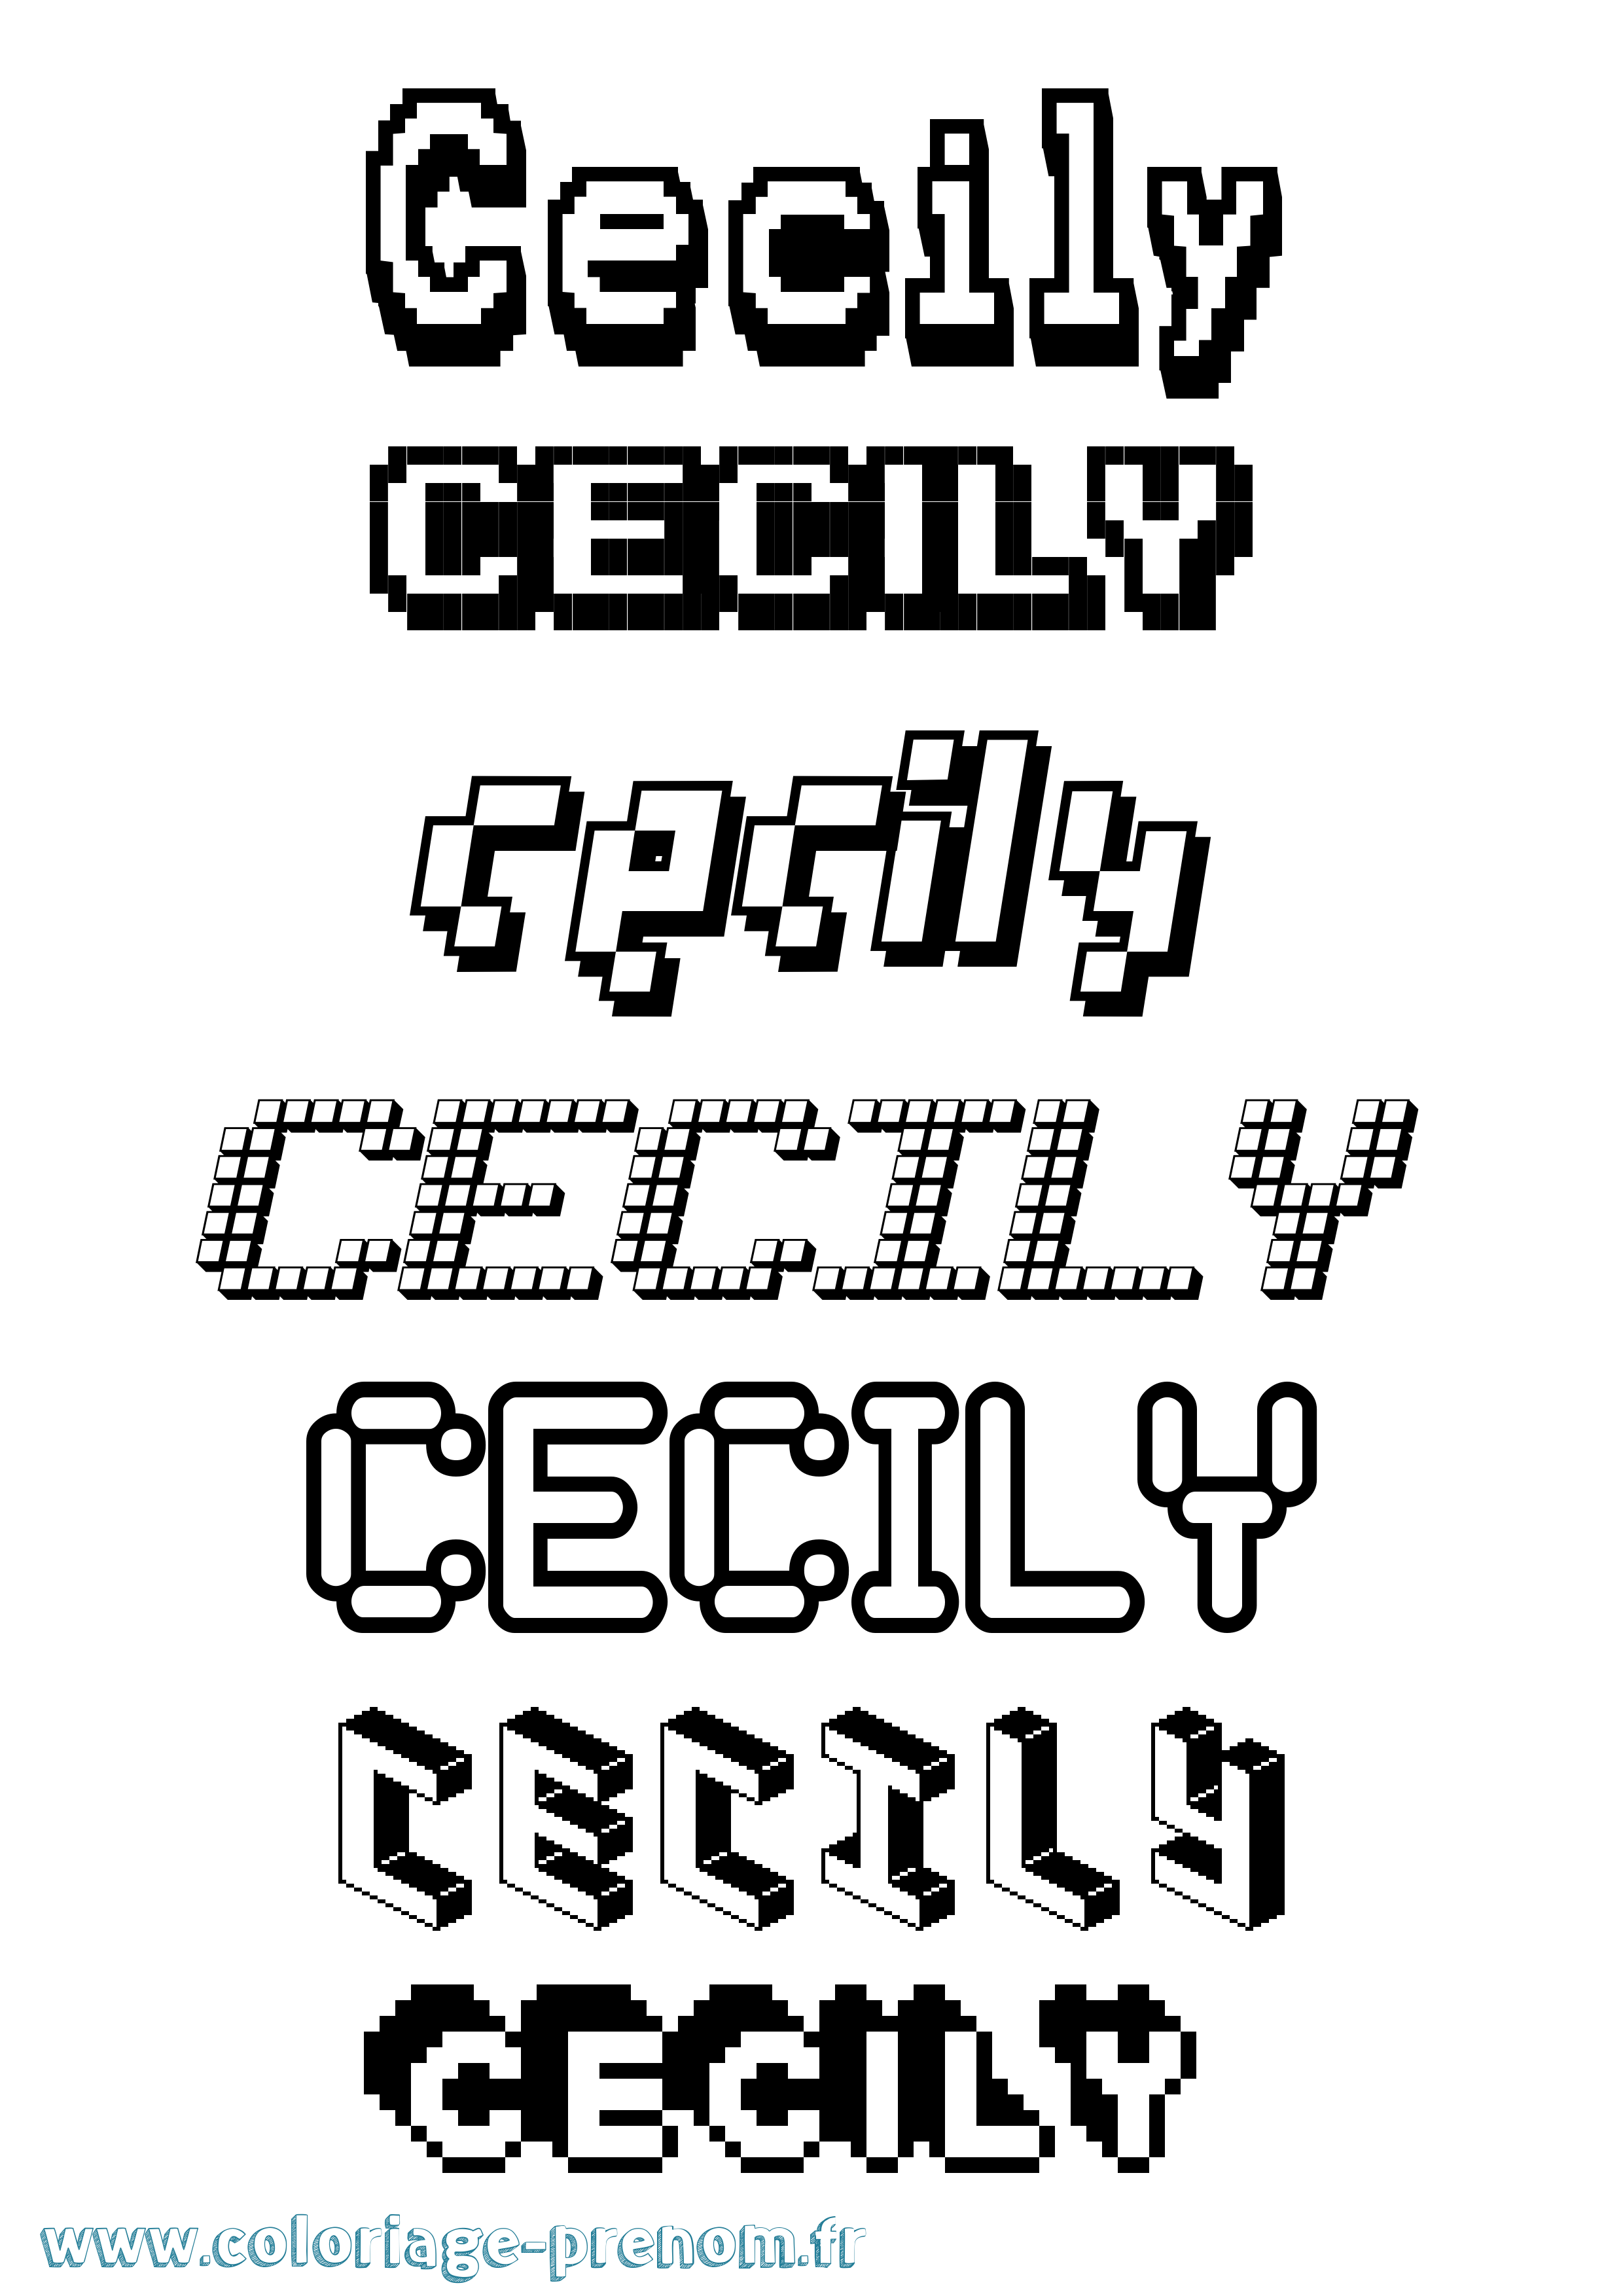 Coloriage prénom Cecily Pixel